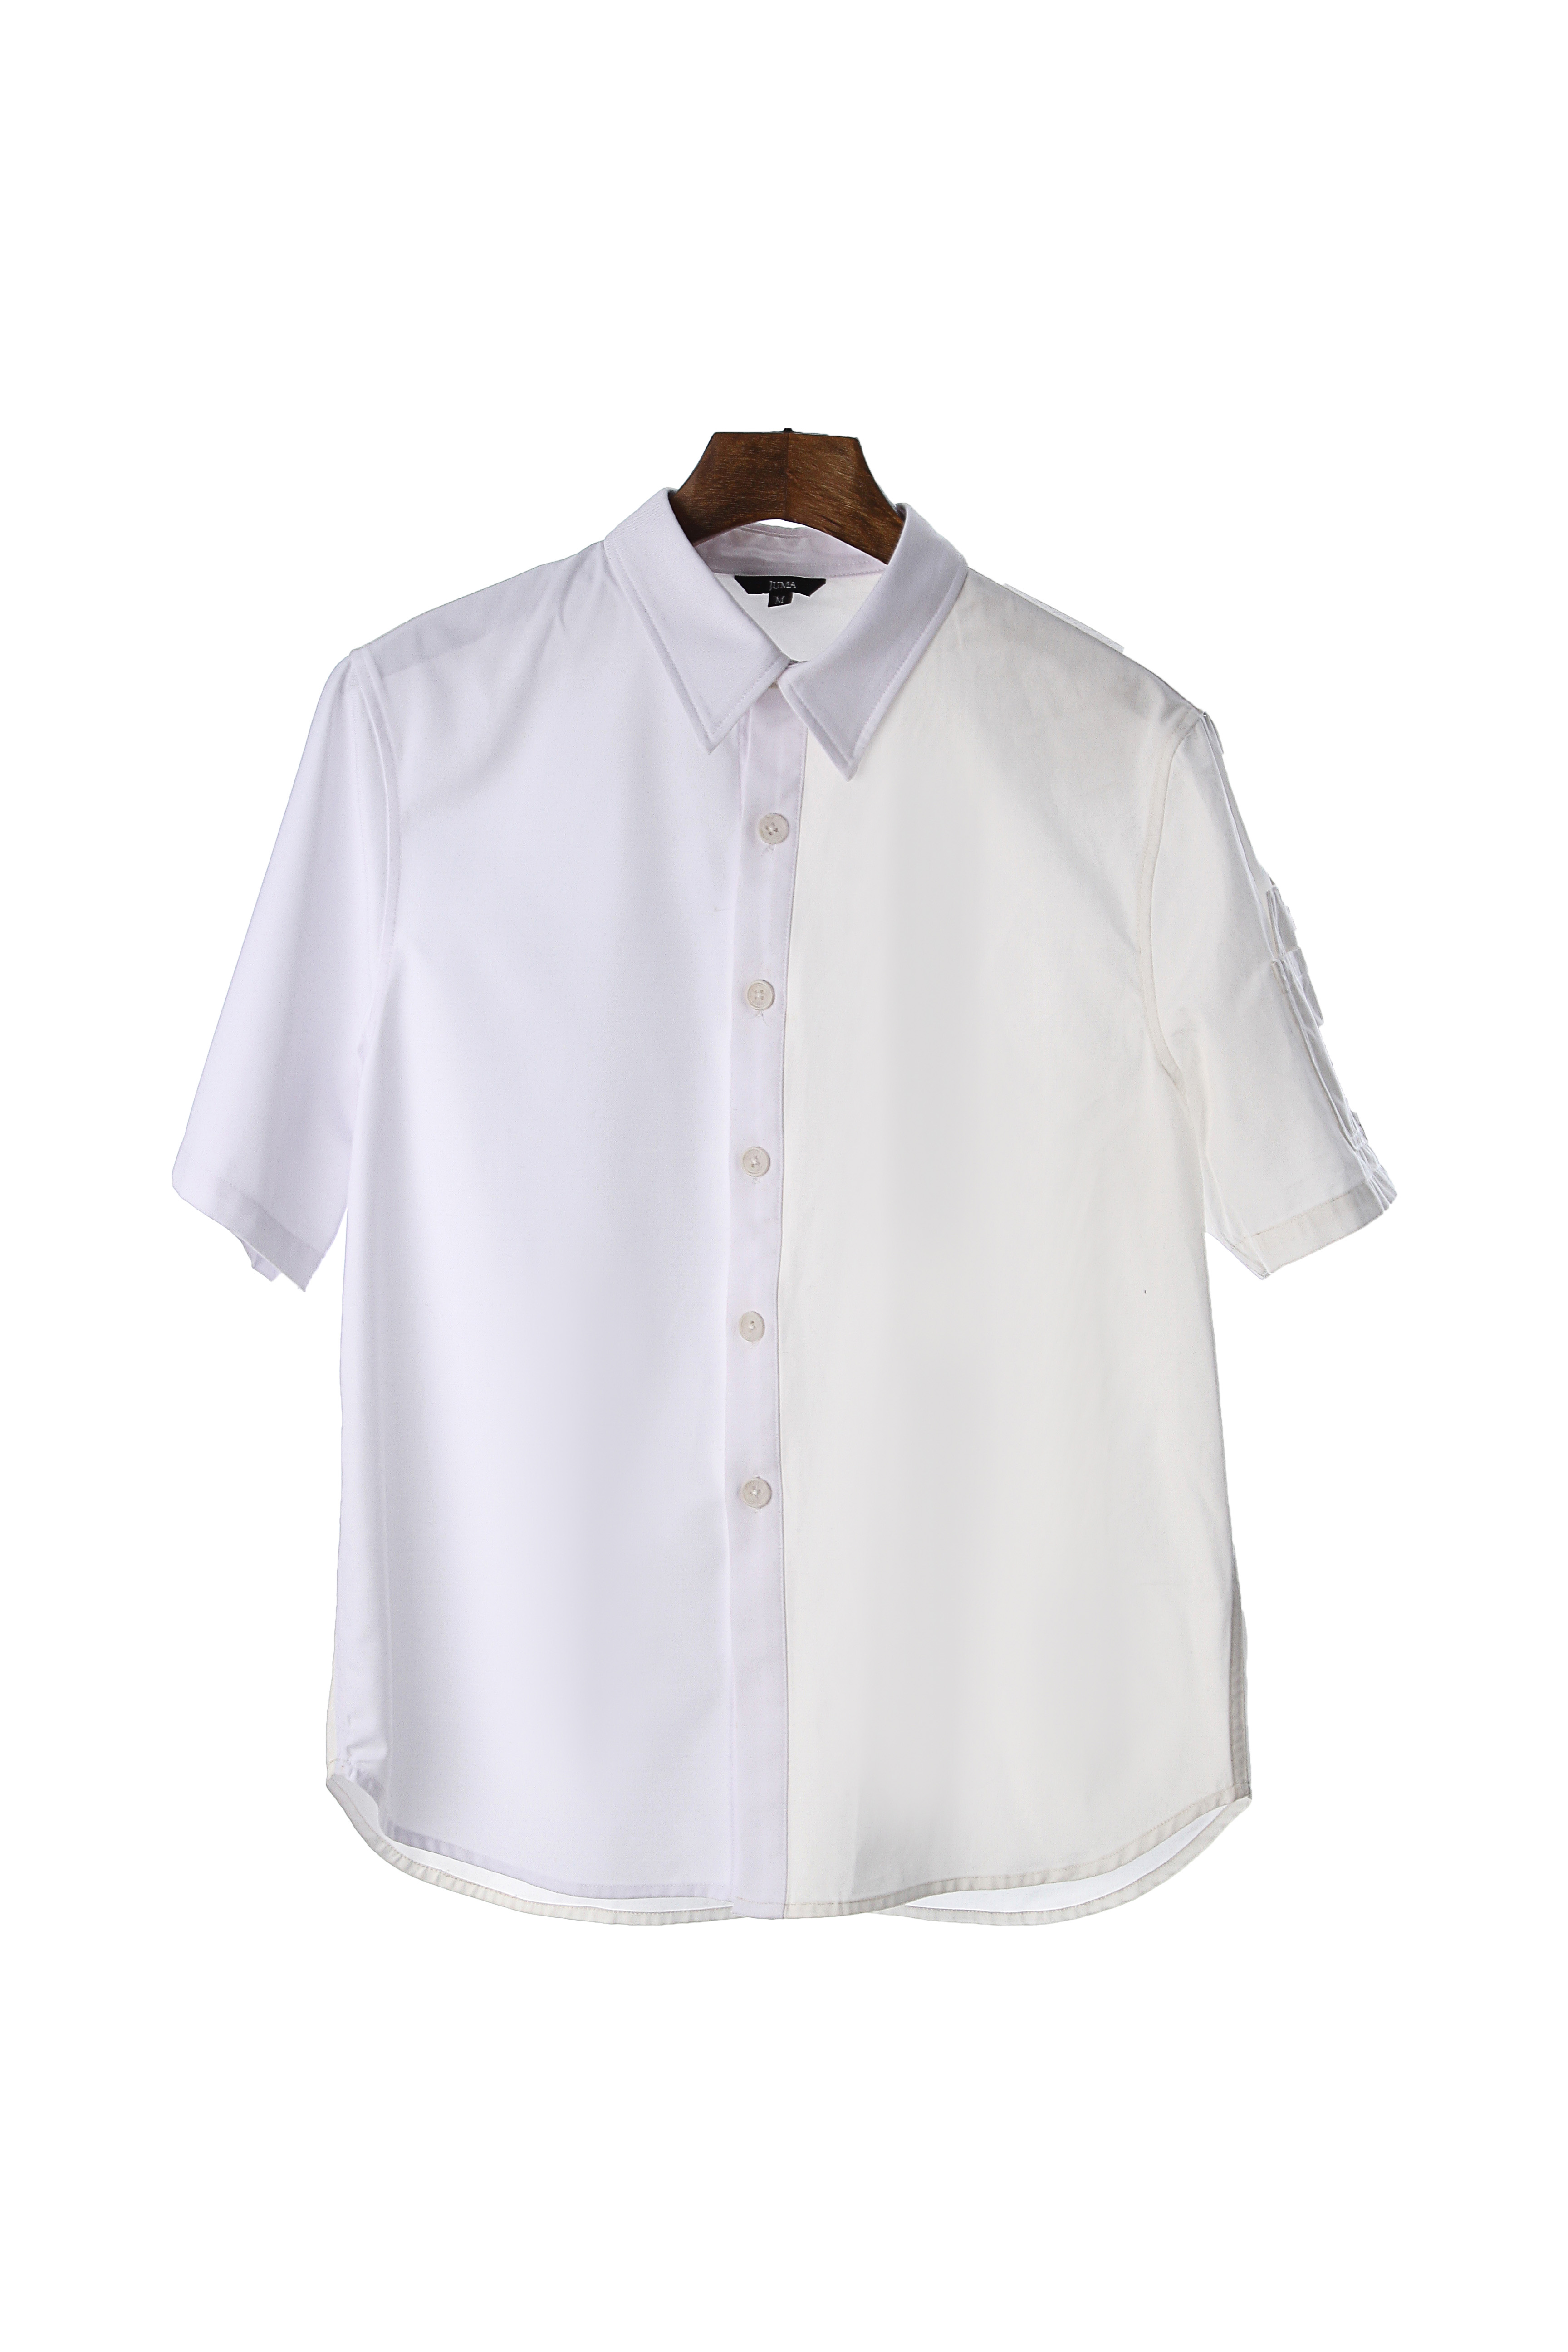 JUMA 双色调衬衫-4个再生水瓶-白色｜JUMA Two Toned Shirt - 4 Recycled Water Bottles - White